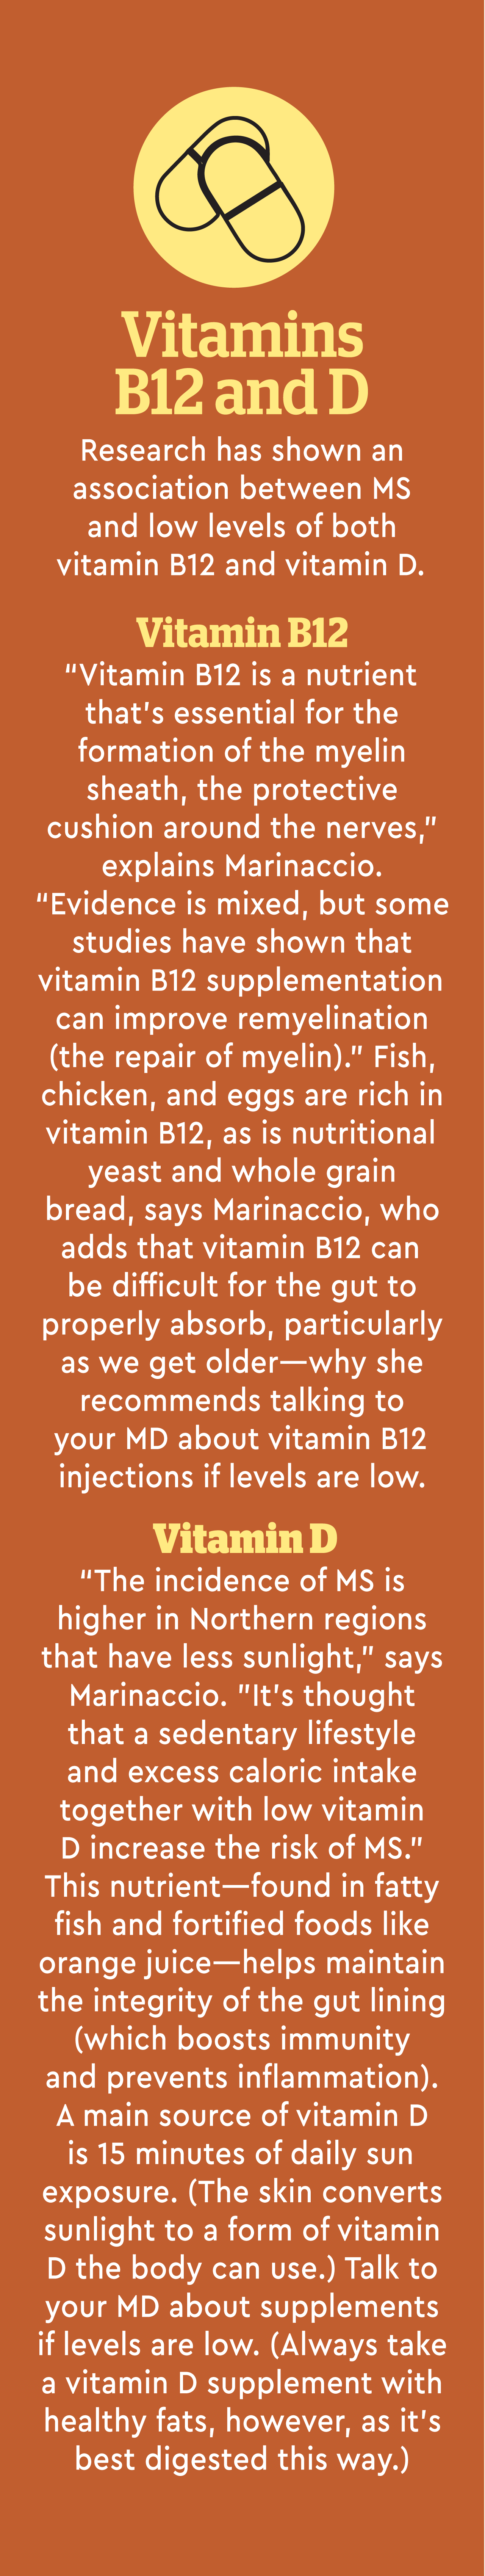 vitamins b12 and vitamin d description graphic